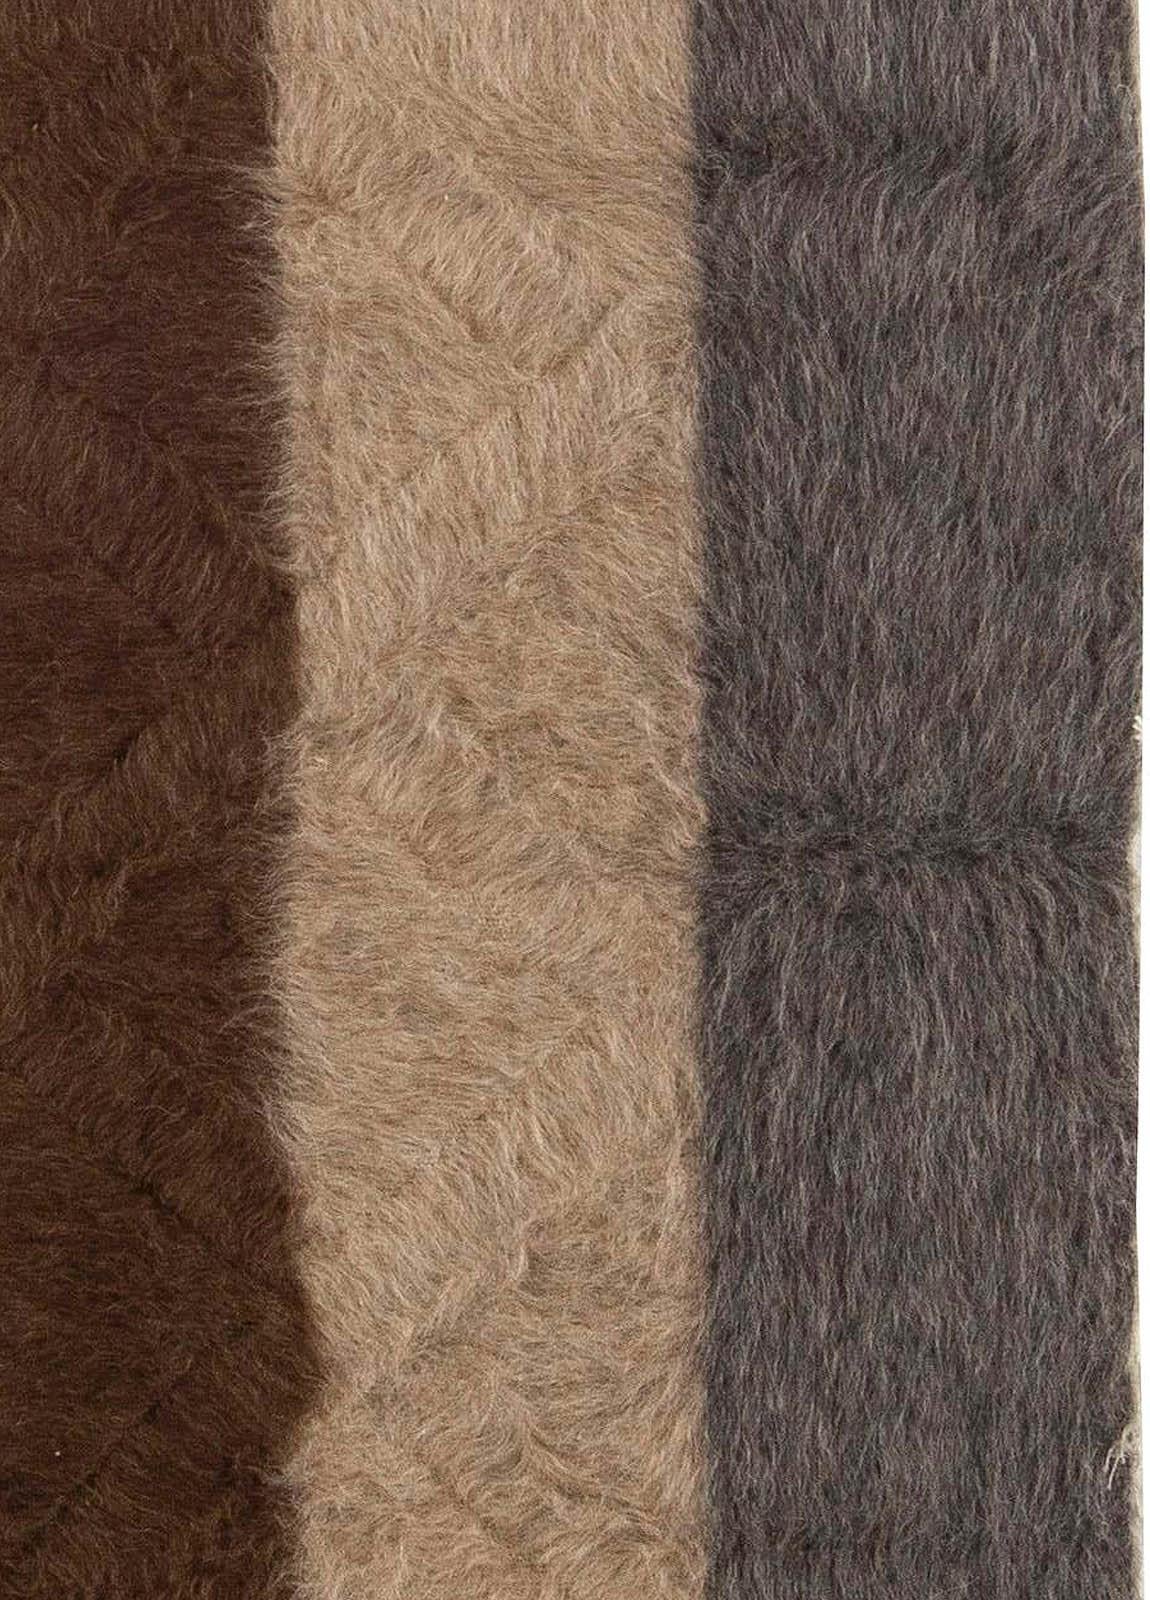 Taurus Collection modern striped goat hair rug by Doris Leslie Blau.
Size: 4'0